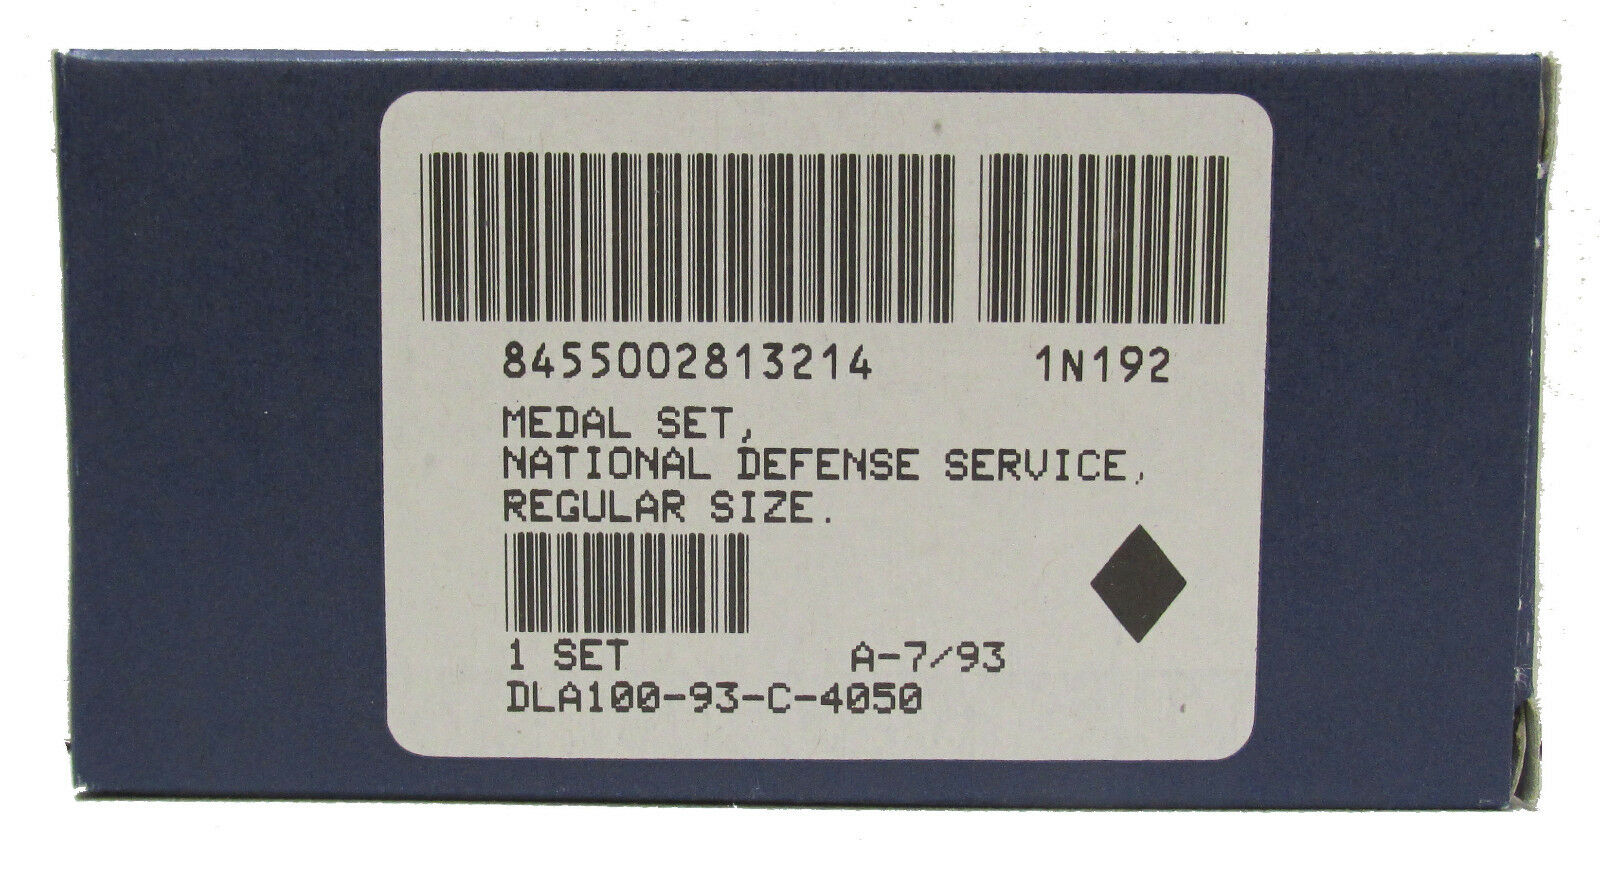 Authentic National Defense Medal & Ribbon Set - Genuine U.S. Military Medal